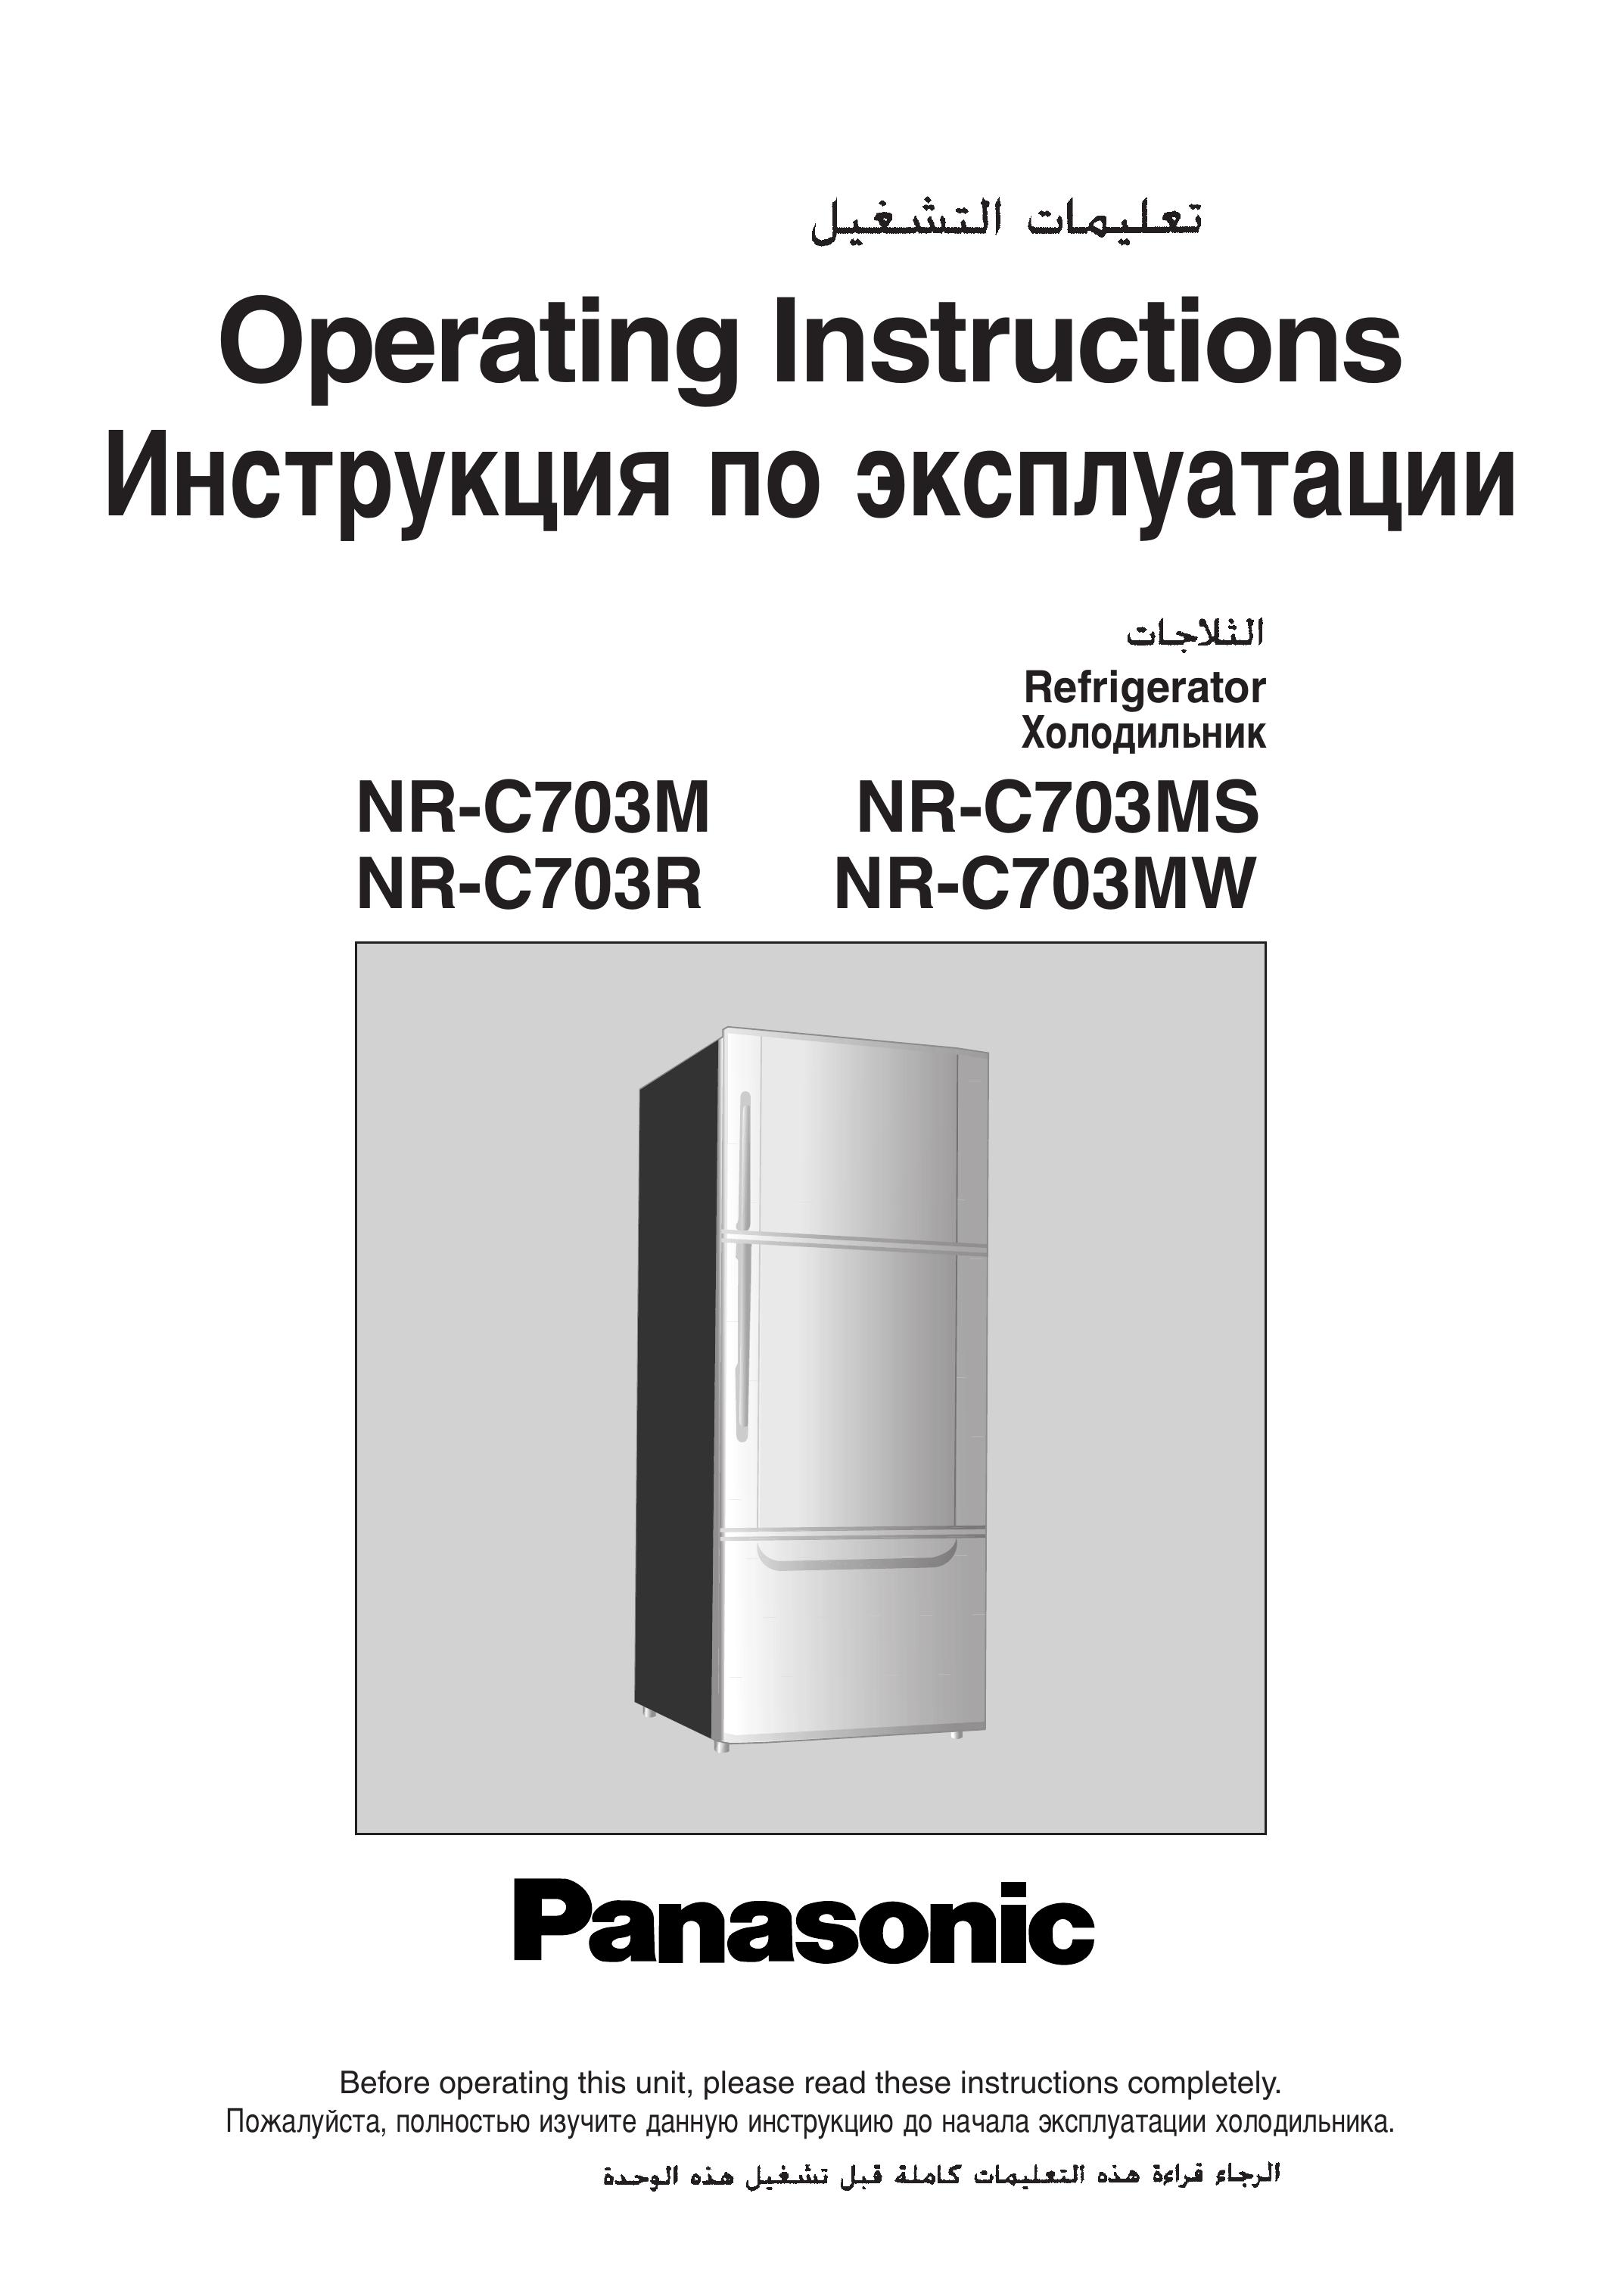 Panasonic NR-C703MW Refrigerator User Manual